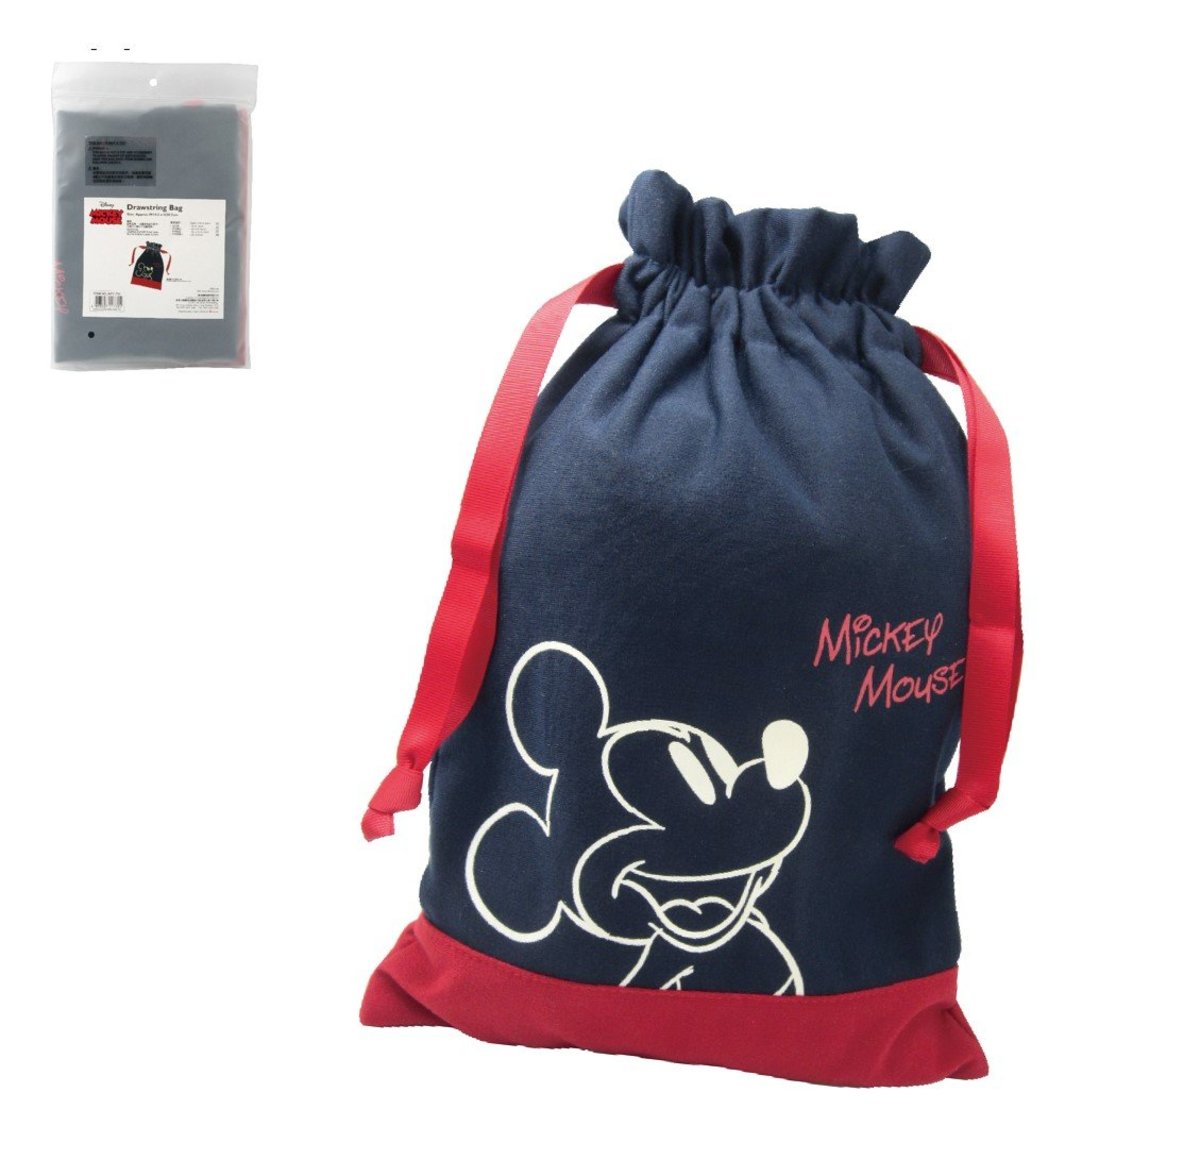 Drawstring bag (Licensed by Disney)